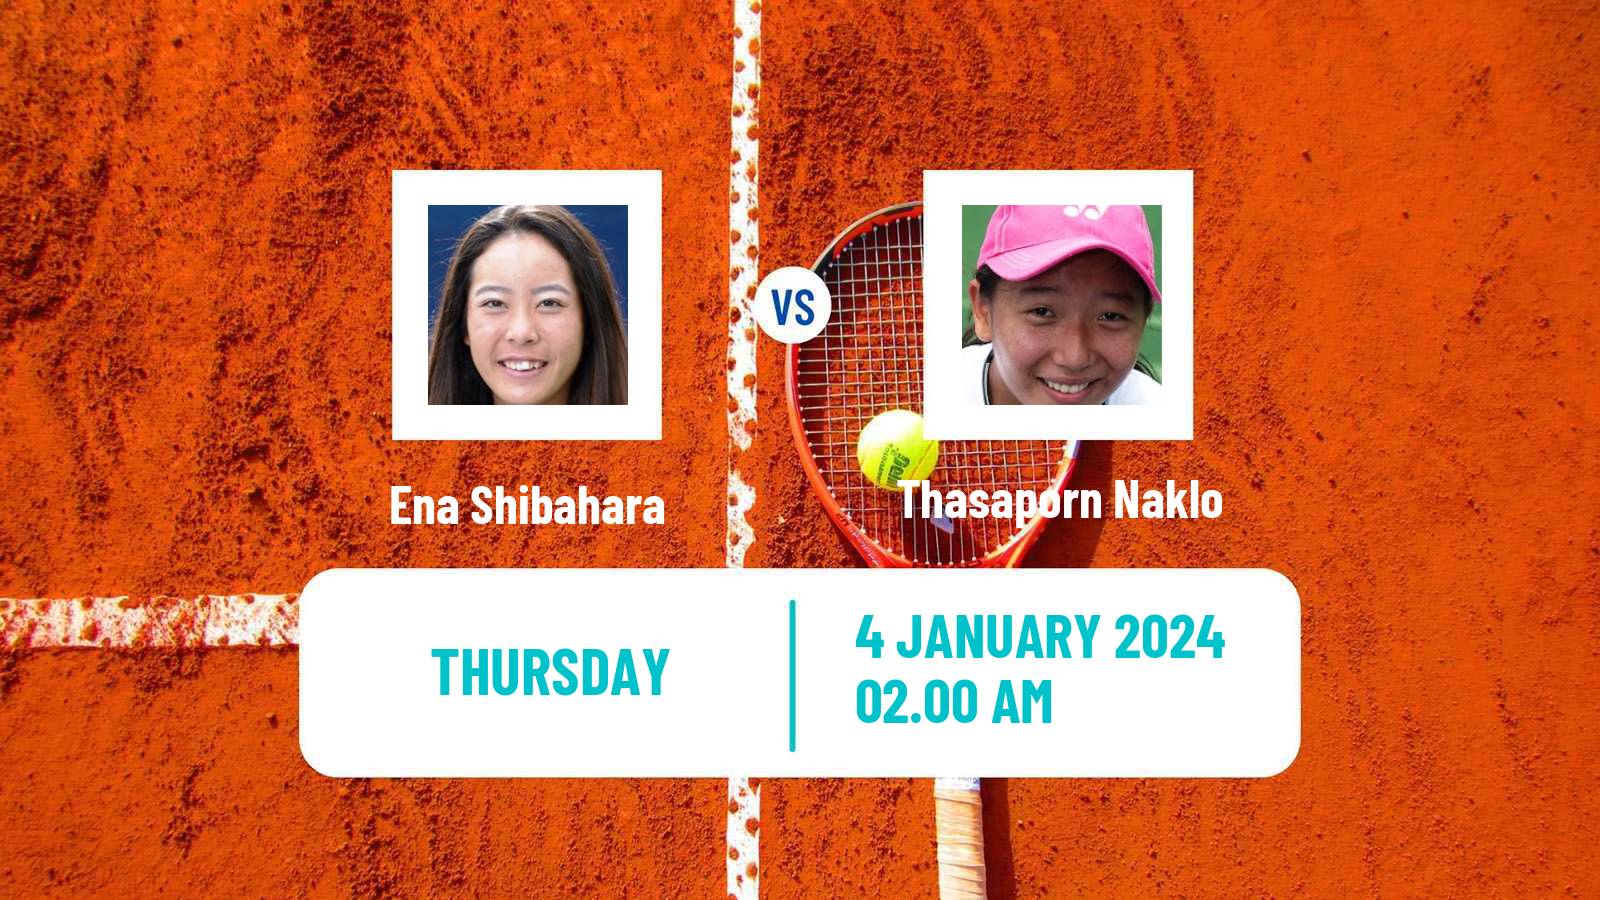 Tennis ITF W50 Nonthaburi Women Ena Shibahara - Thasaporn Naklo